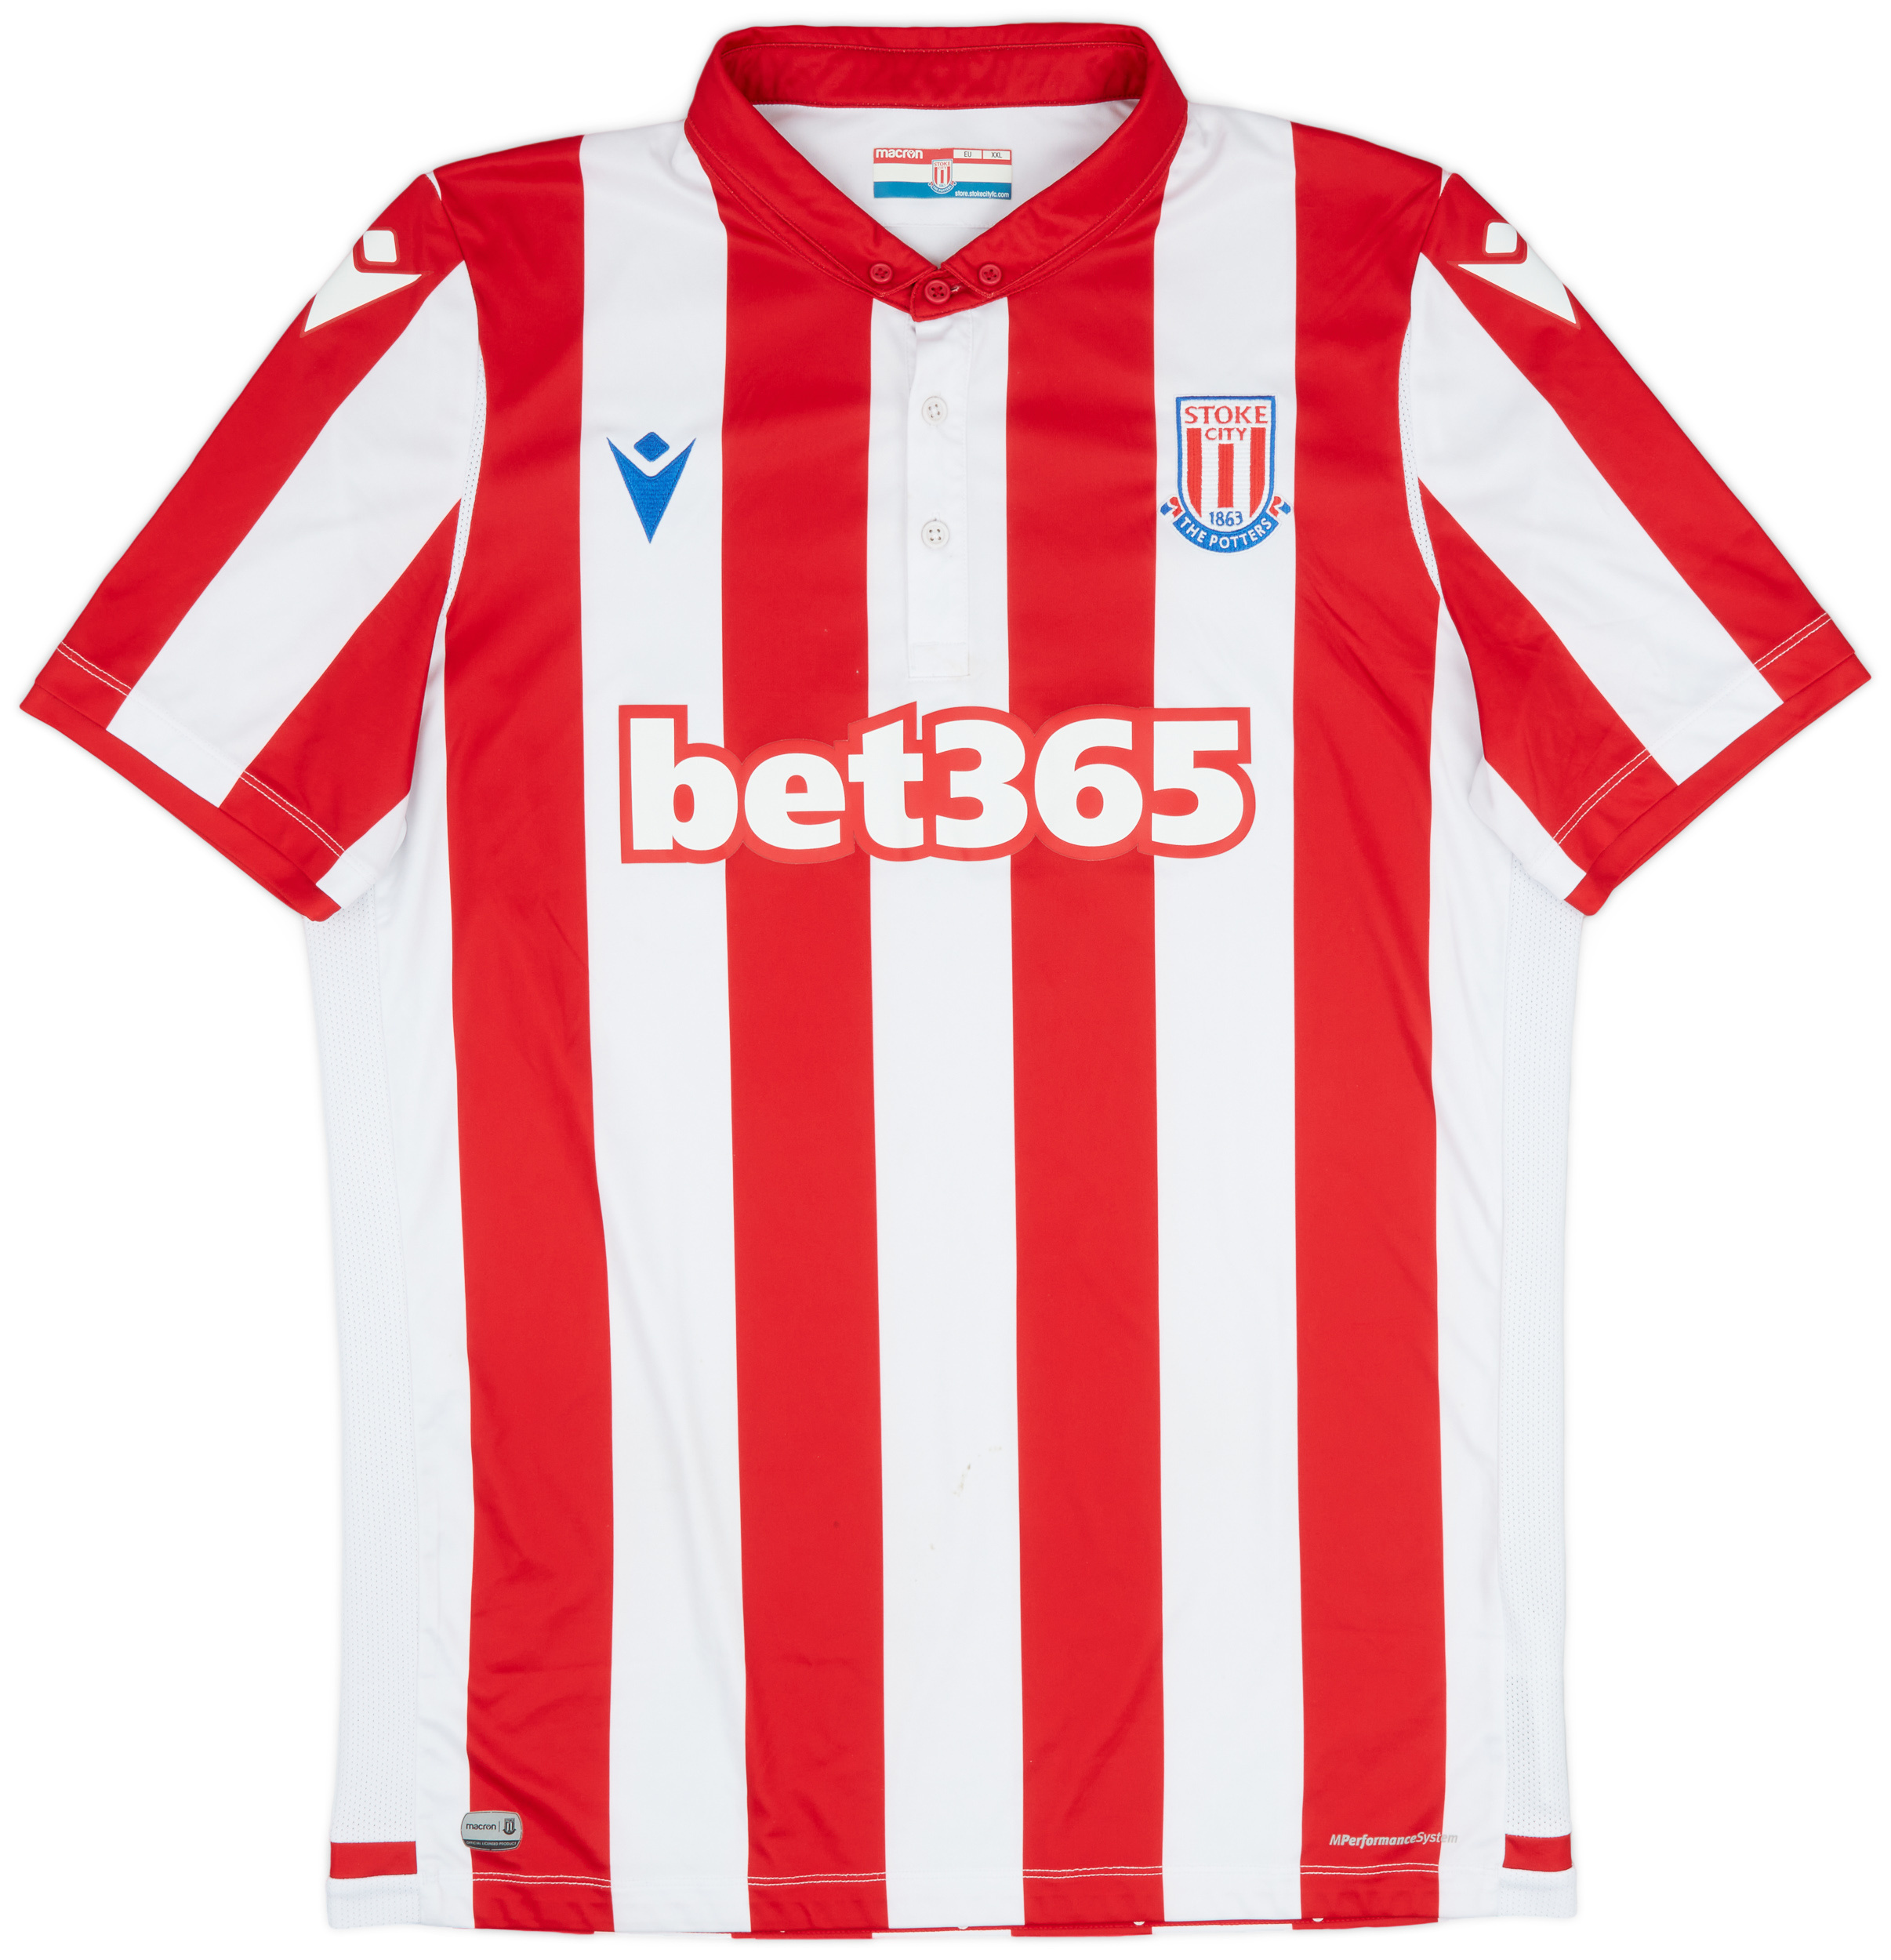 2019-20 Stoke City Home Shirt - 6/10 - ()